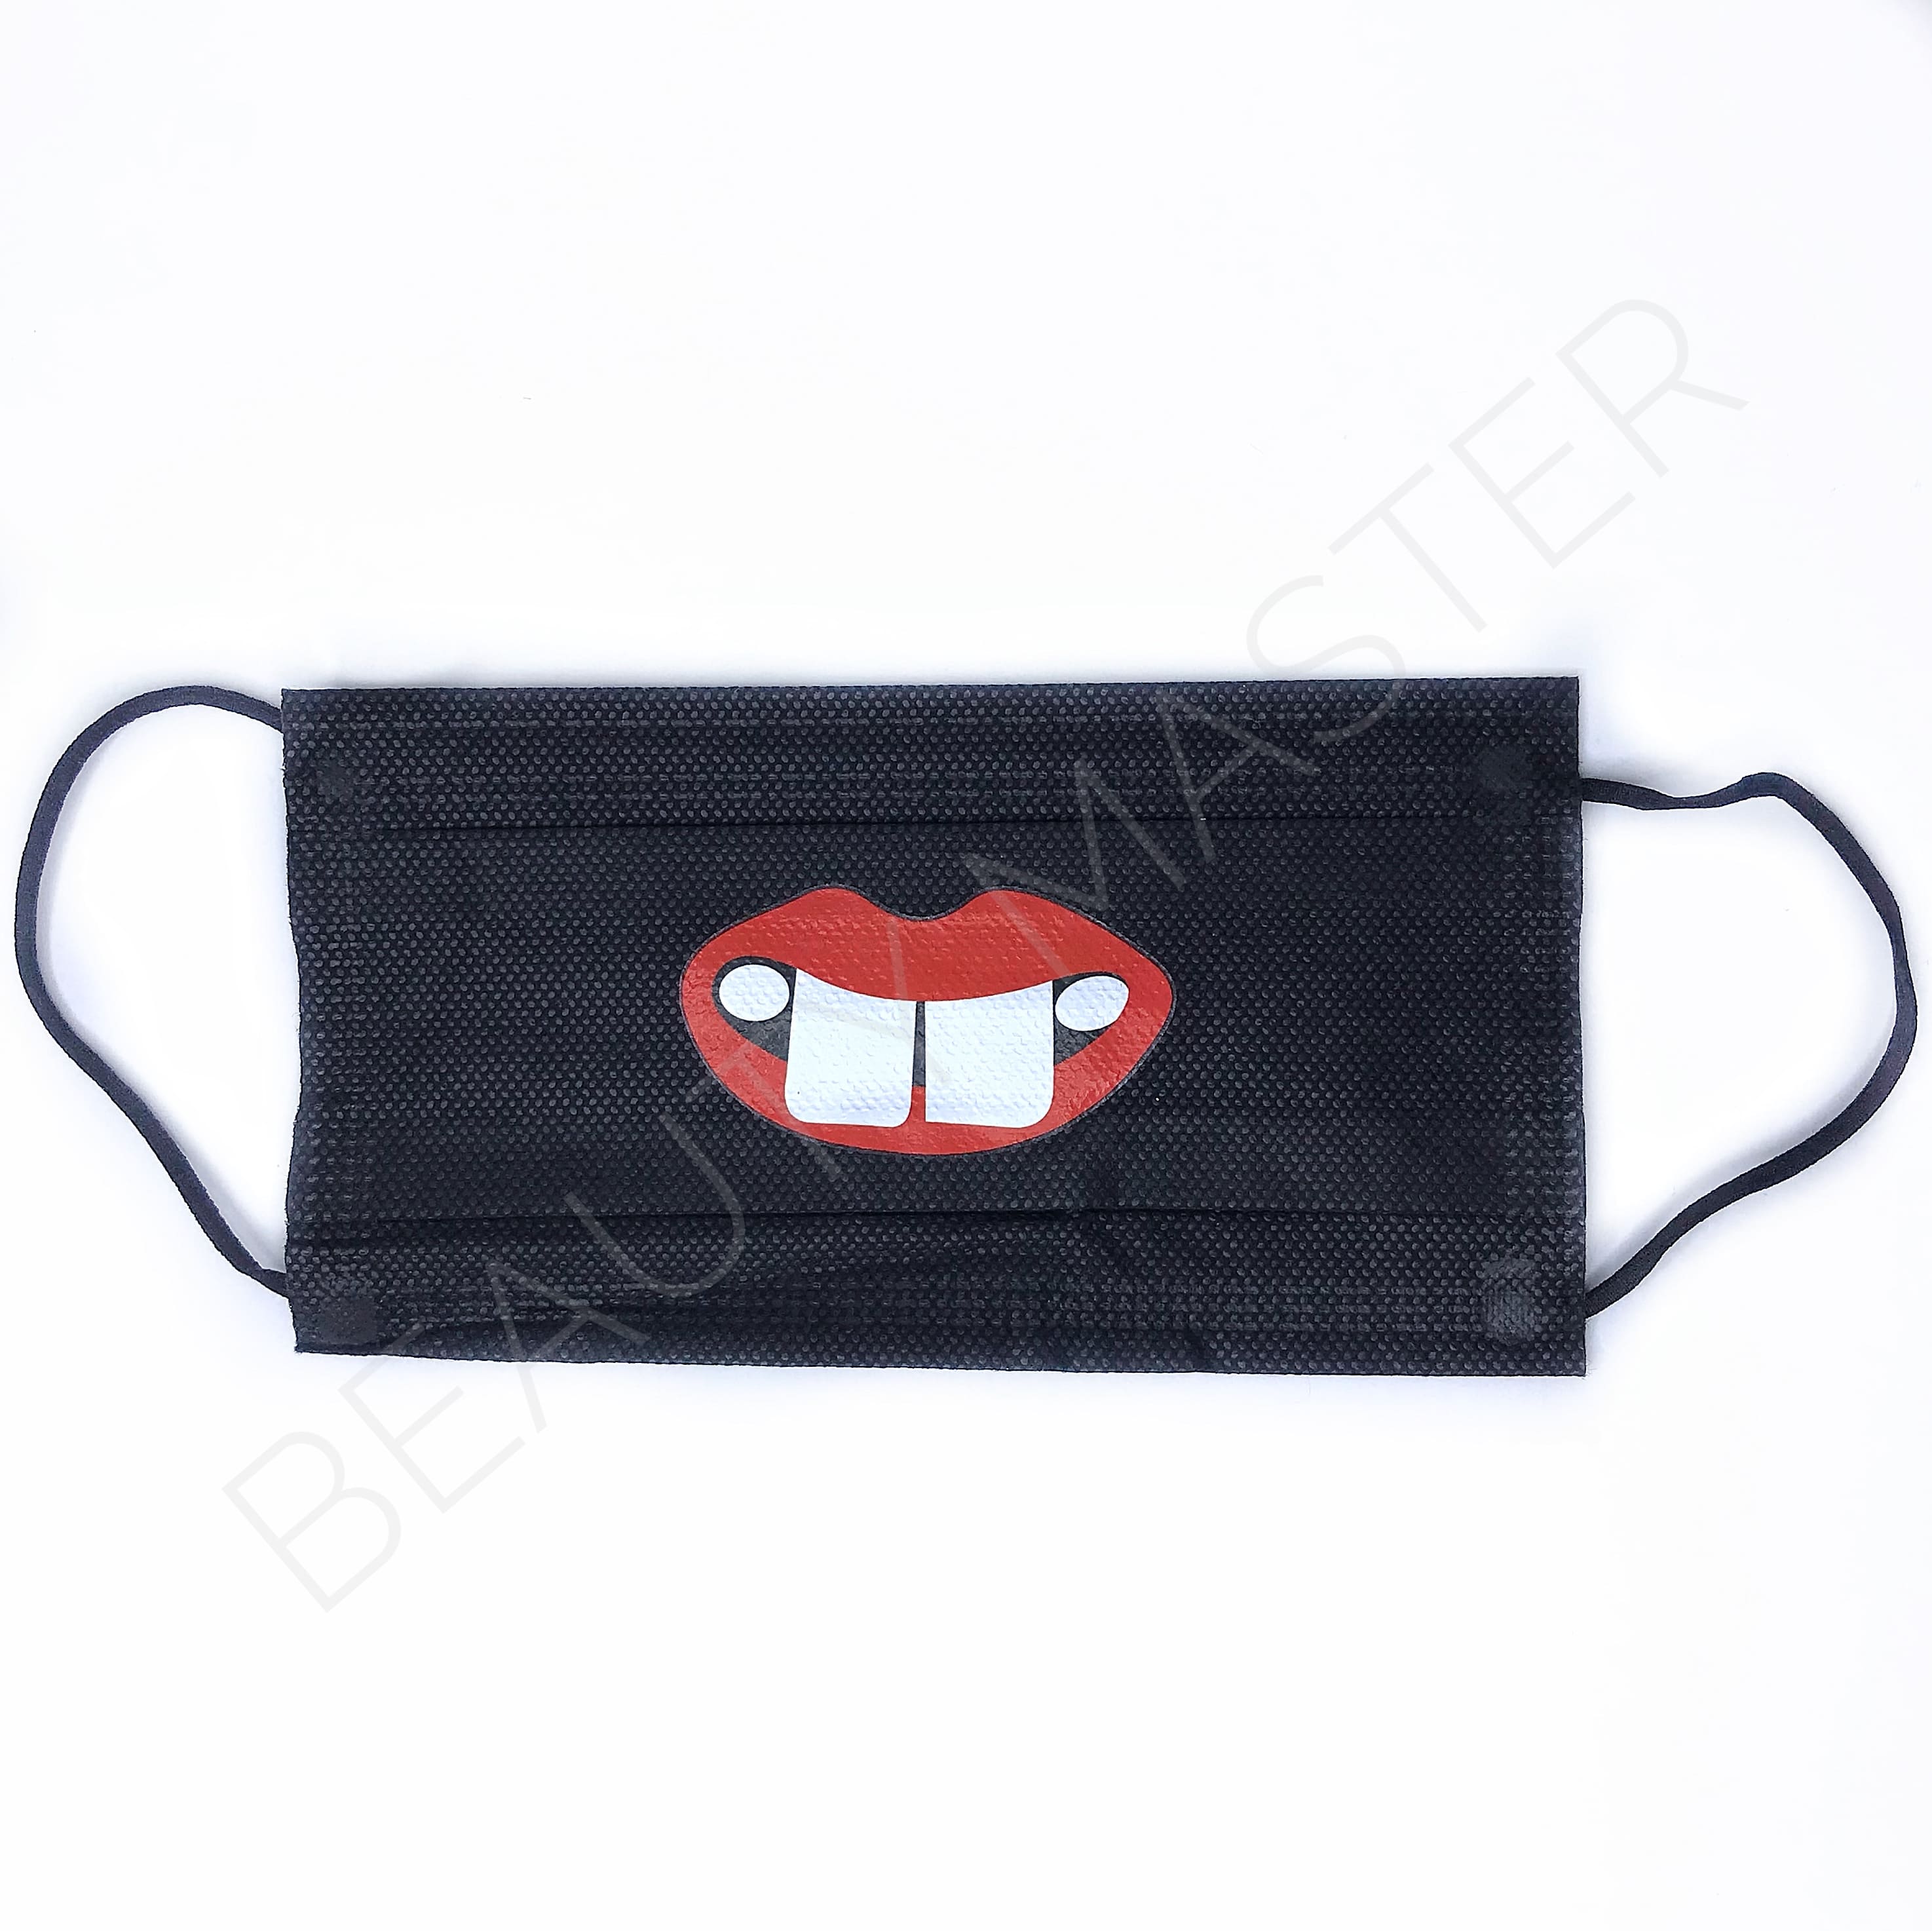 Маска Fashion Mask Mouth with long teeth, 1шт не медицинская